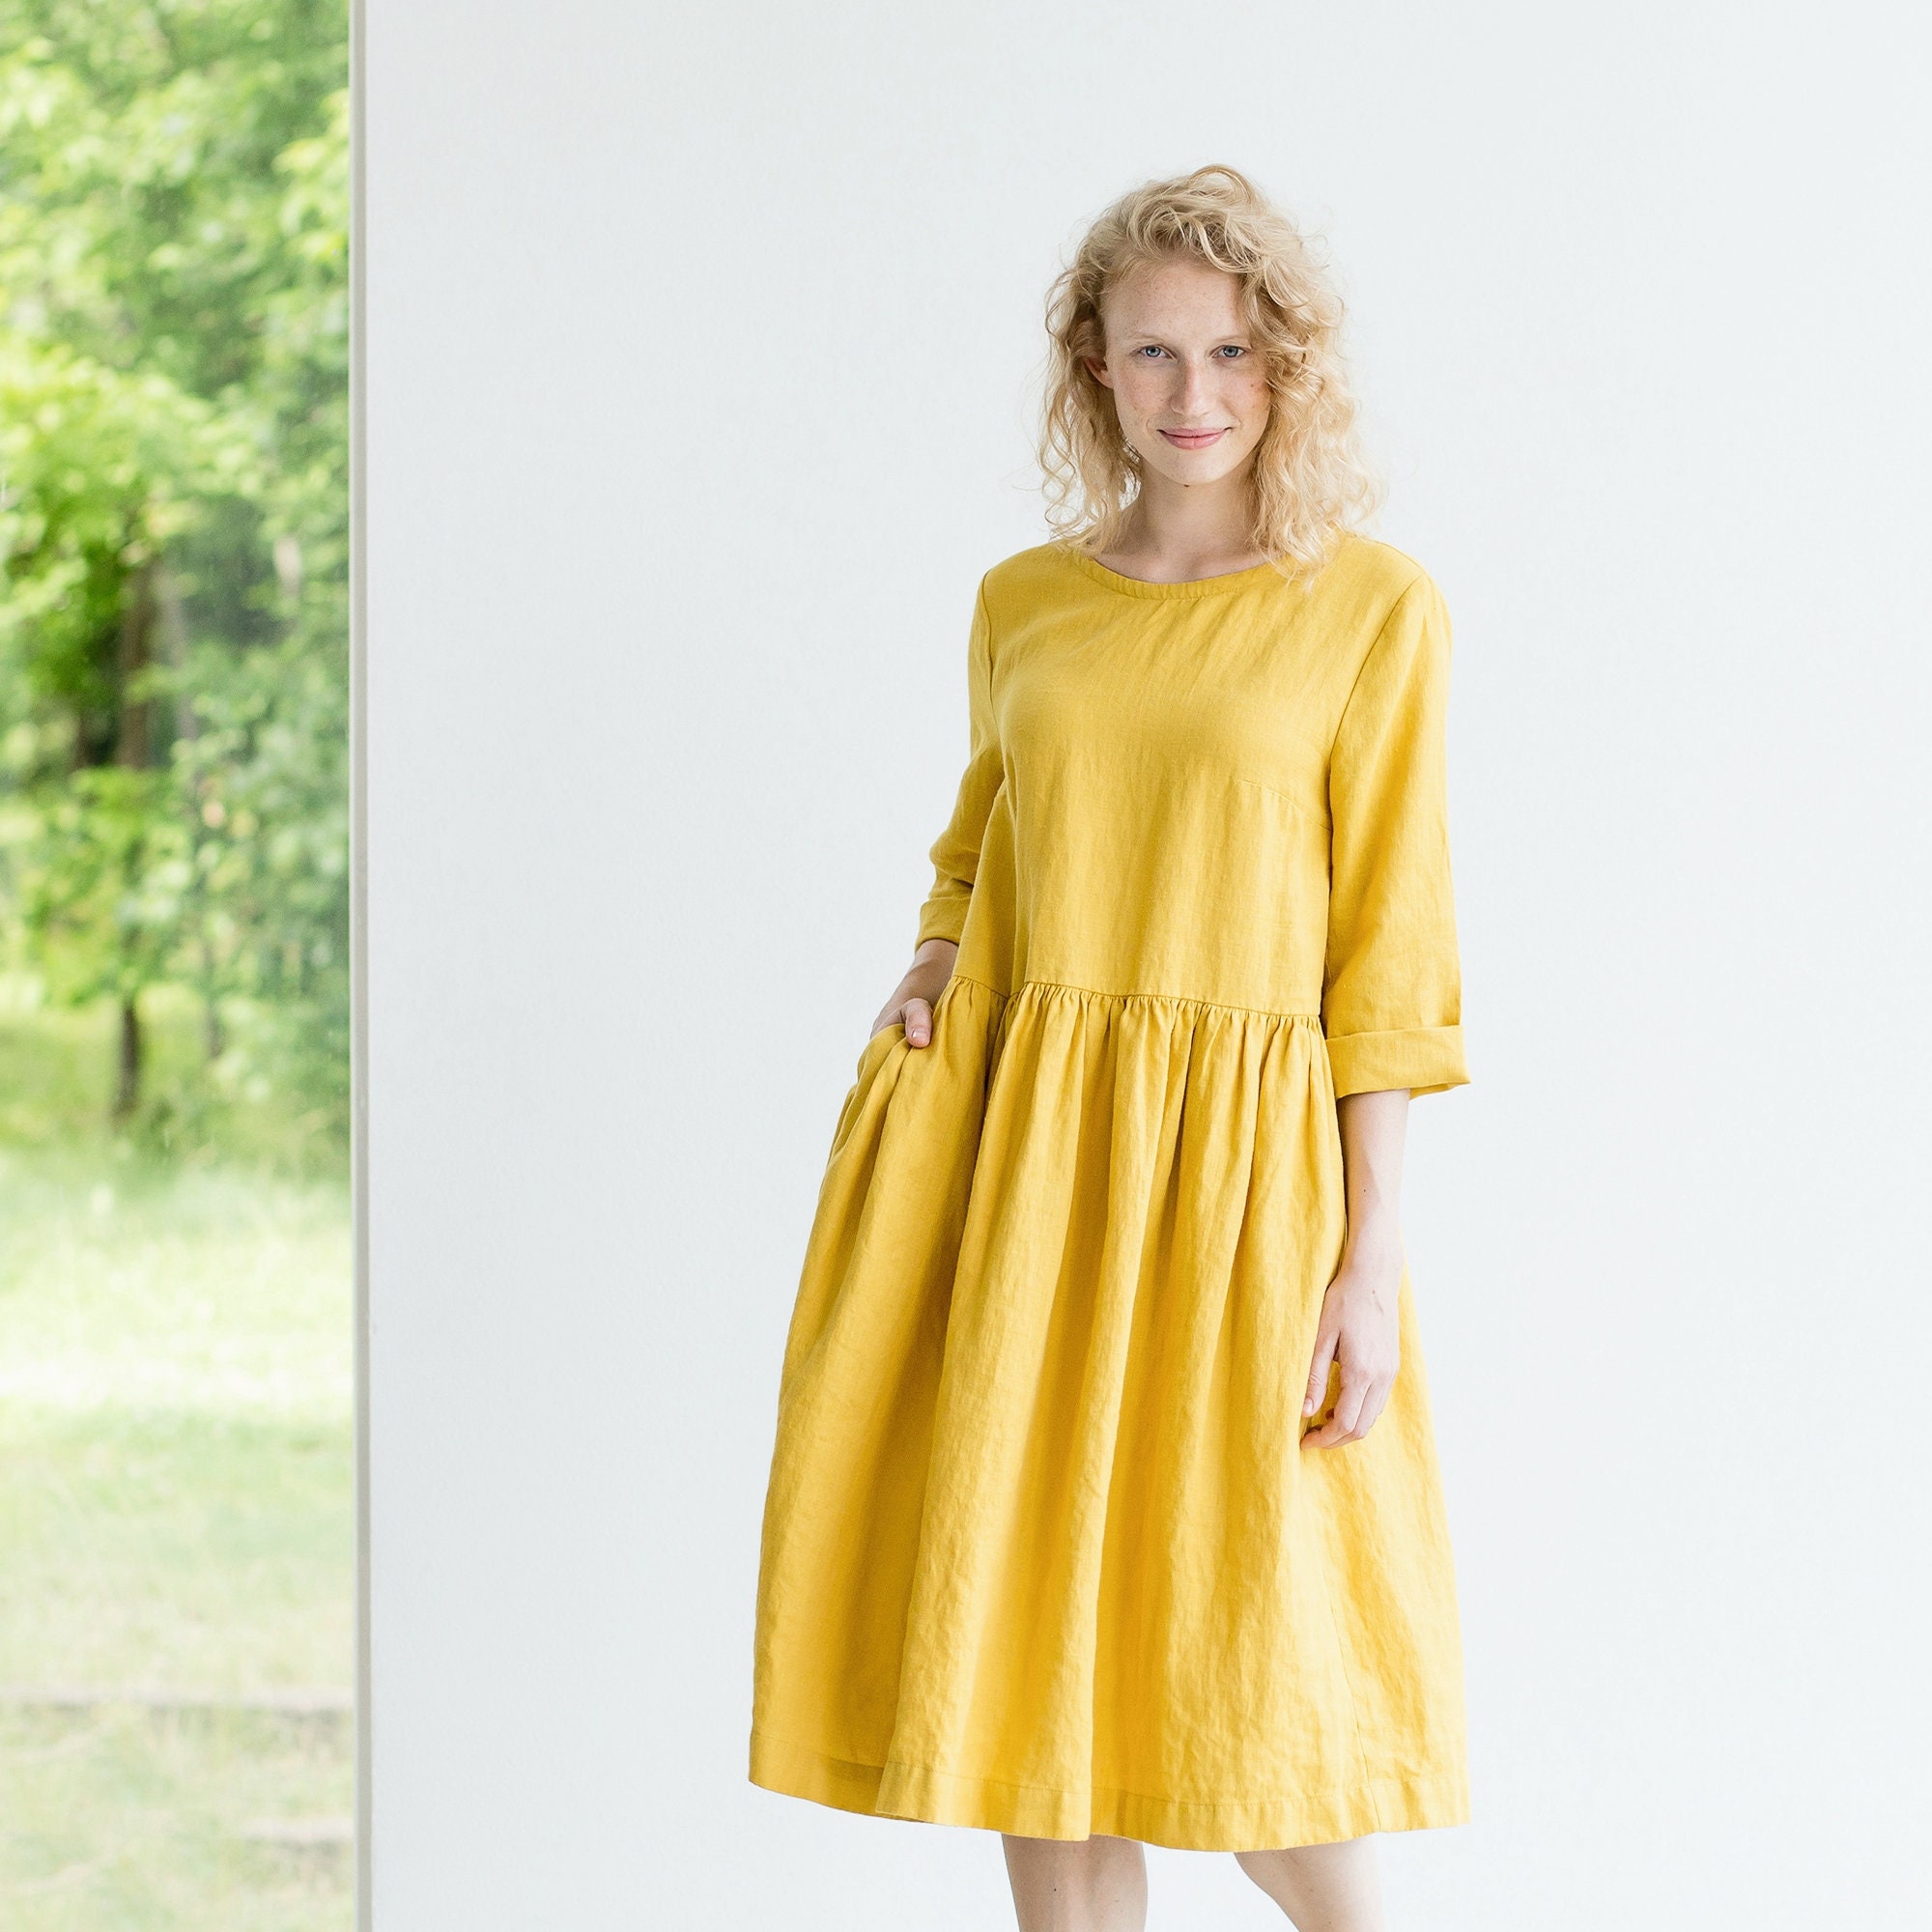 Italian linen dresses Fitted Casual Long Sleeve yellow Spliced Women Dress